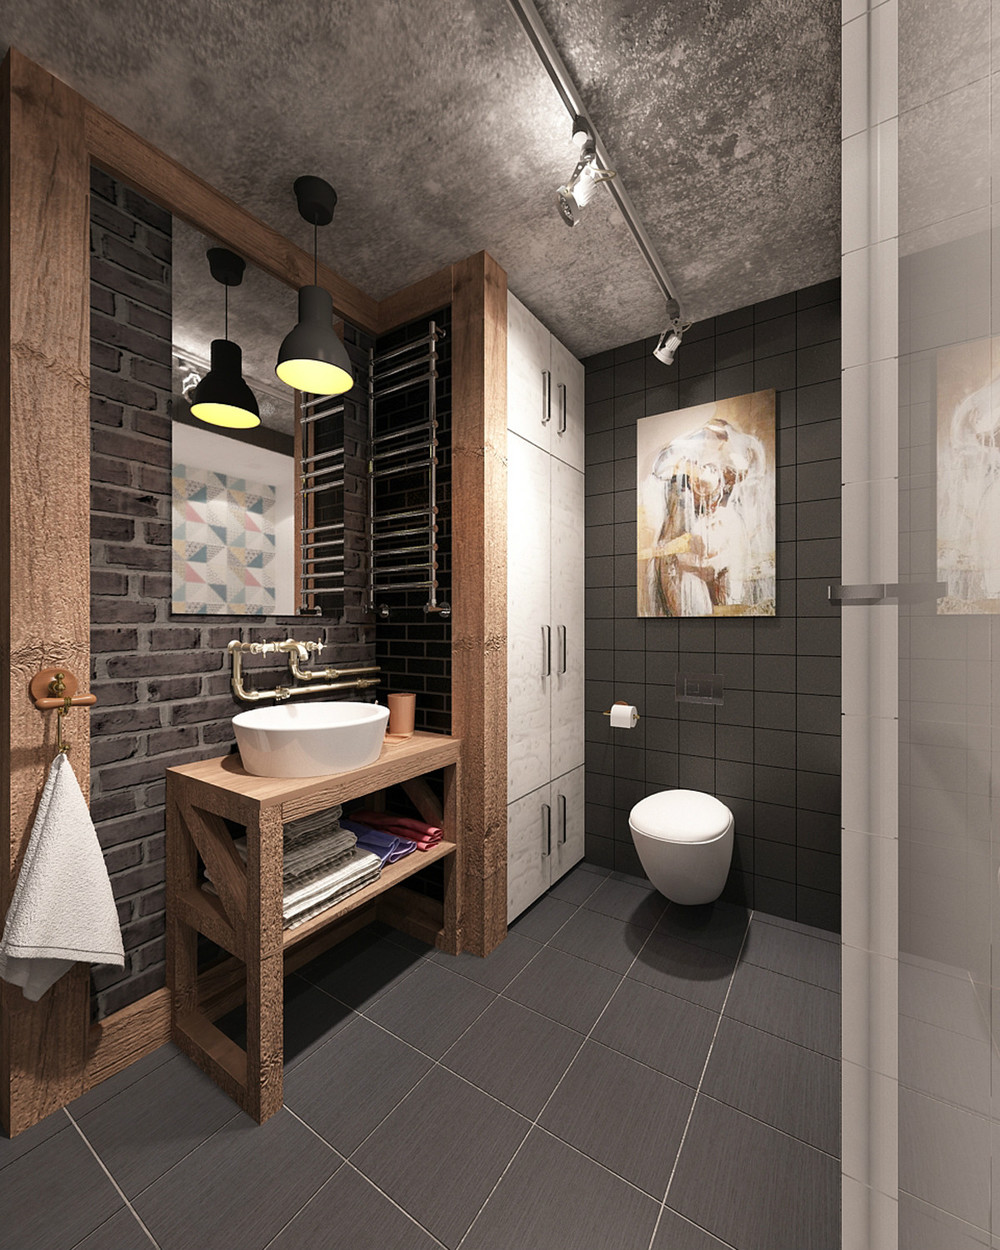 gray bathroom design "width =" 1000 "height =" 1250 "srcset =" https://mileray.com/wp-content/uploads/2020/05/1588516261_758_Luxury-Bathroom-Decorating-Ideas-With-Beautiful-a-Backsplash-Design-Looks.jpg 1000w, https : //mileray.com/wp-content/uploads/2016/09/open-industrial-bathroom-design-ART-UGOL-240x300.jpg 240w, https://mileray.com/wp-content/uploads/2016 / 09 / open-industrial-bathroom-design-ART-UGOL-768x960.jpg 768w, https://mileray.com/wp-content/uploads/2016/09/open-industrial-bathroom-design-ART-UGOL- 819x1024 .jpg 819w, https://mileray.com/wp-content/uploads/2016/09/open-industrial-bathroom-design-ART-UGOL-696x870.jpg 696w, https://mileray.com/wp- content / Uploads / 2016/09 / Open-Industrial-Bad-Design-ART-UGOL-336x420.jpg 336w "sizes =" (maximum width: 1000px) 100vw, 1000px